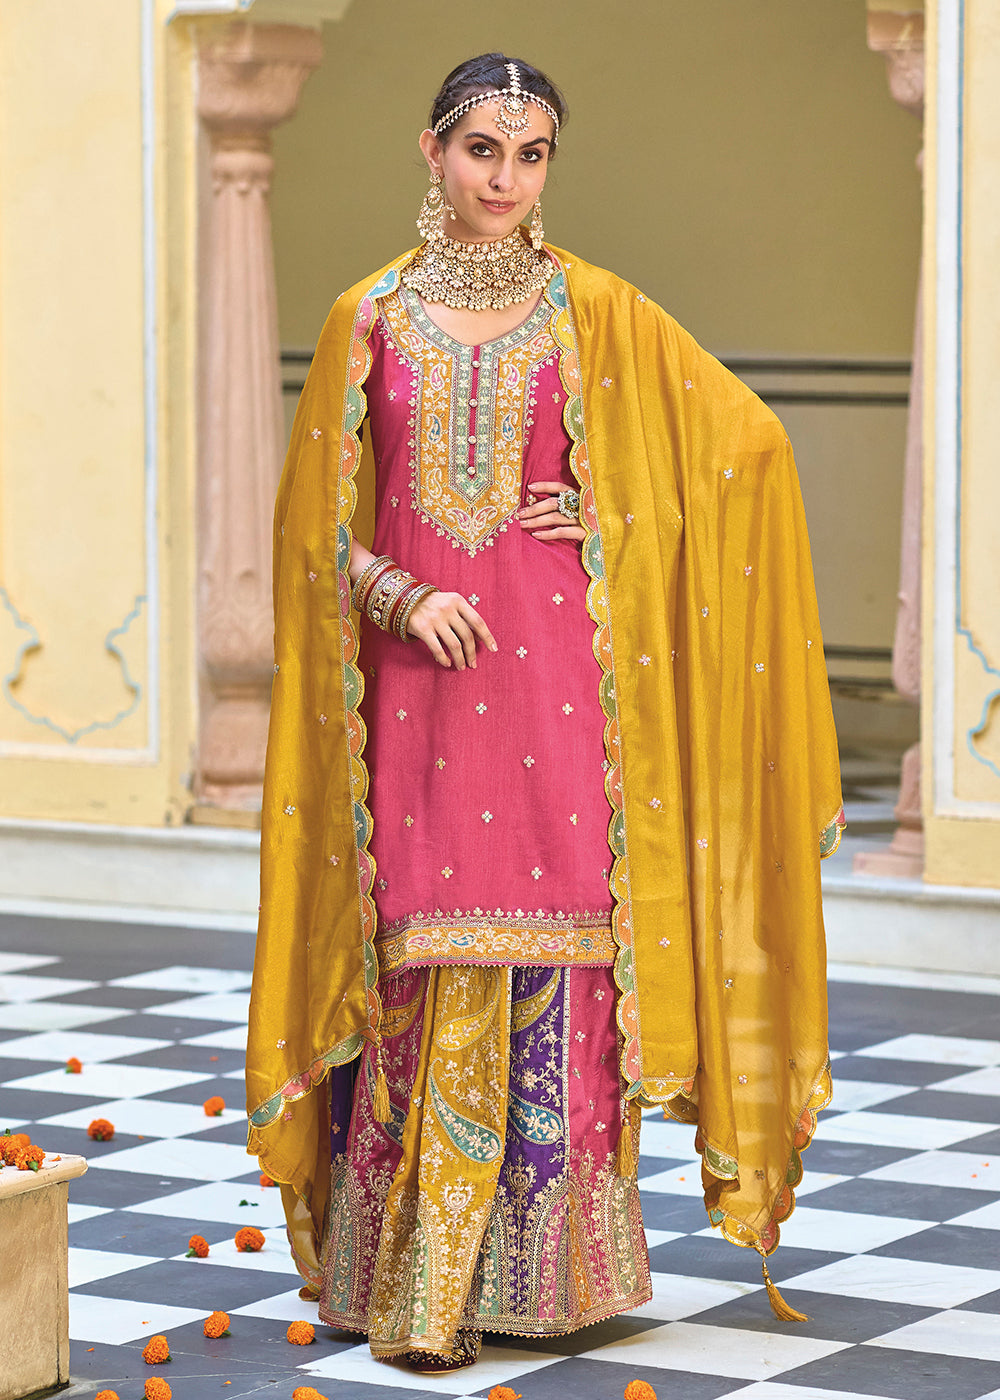 Buy Now Multicolor Pink Premium Silk Kurti Style Lehenga Suit Set Online in USA, UK, Canada & Worldwide at Empress Clothing.